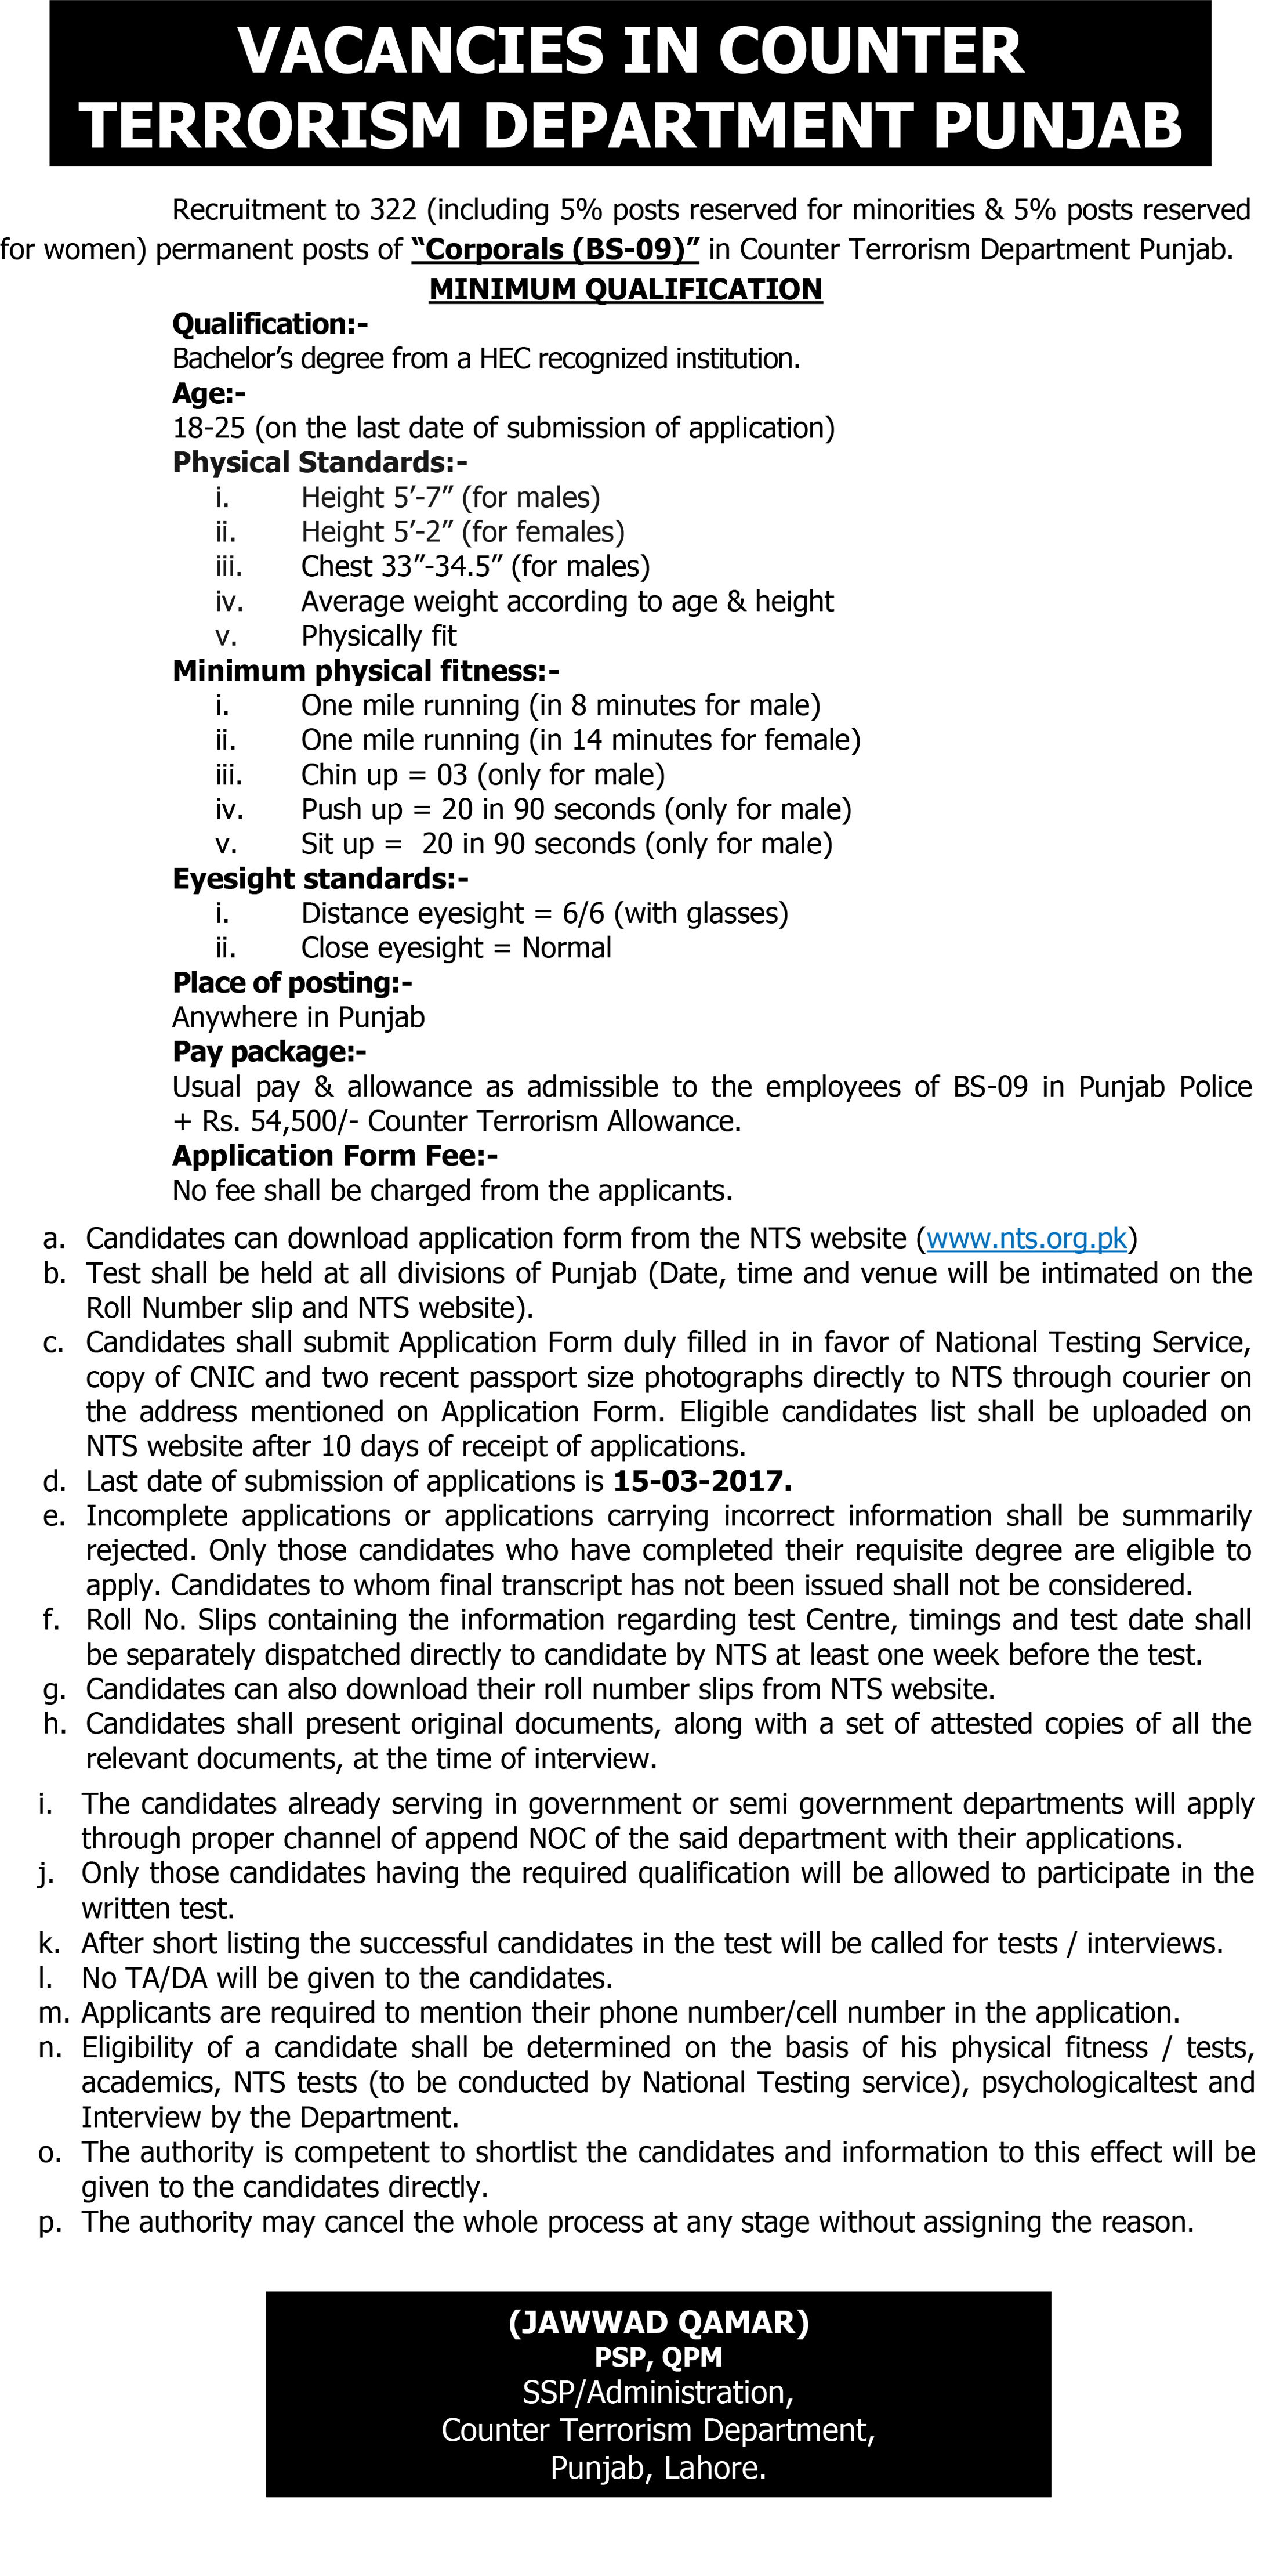 govt jobs online application forms